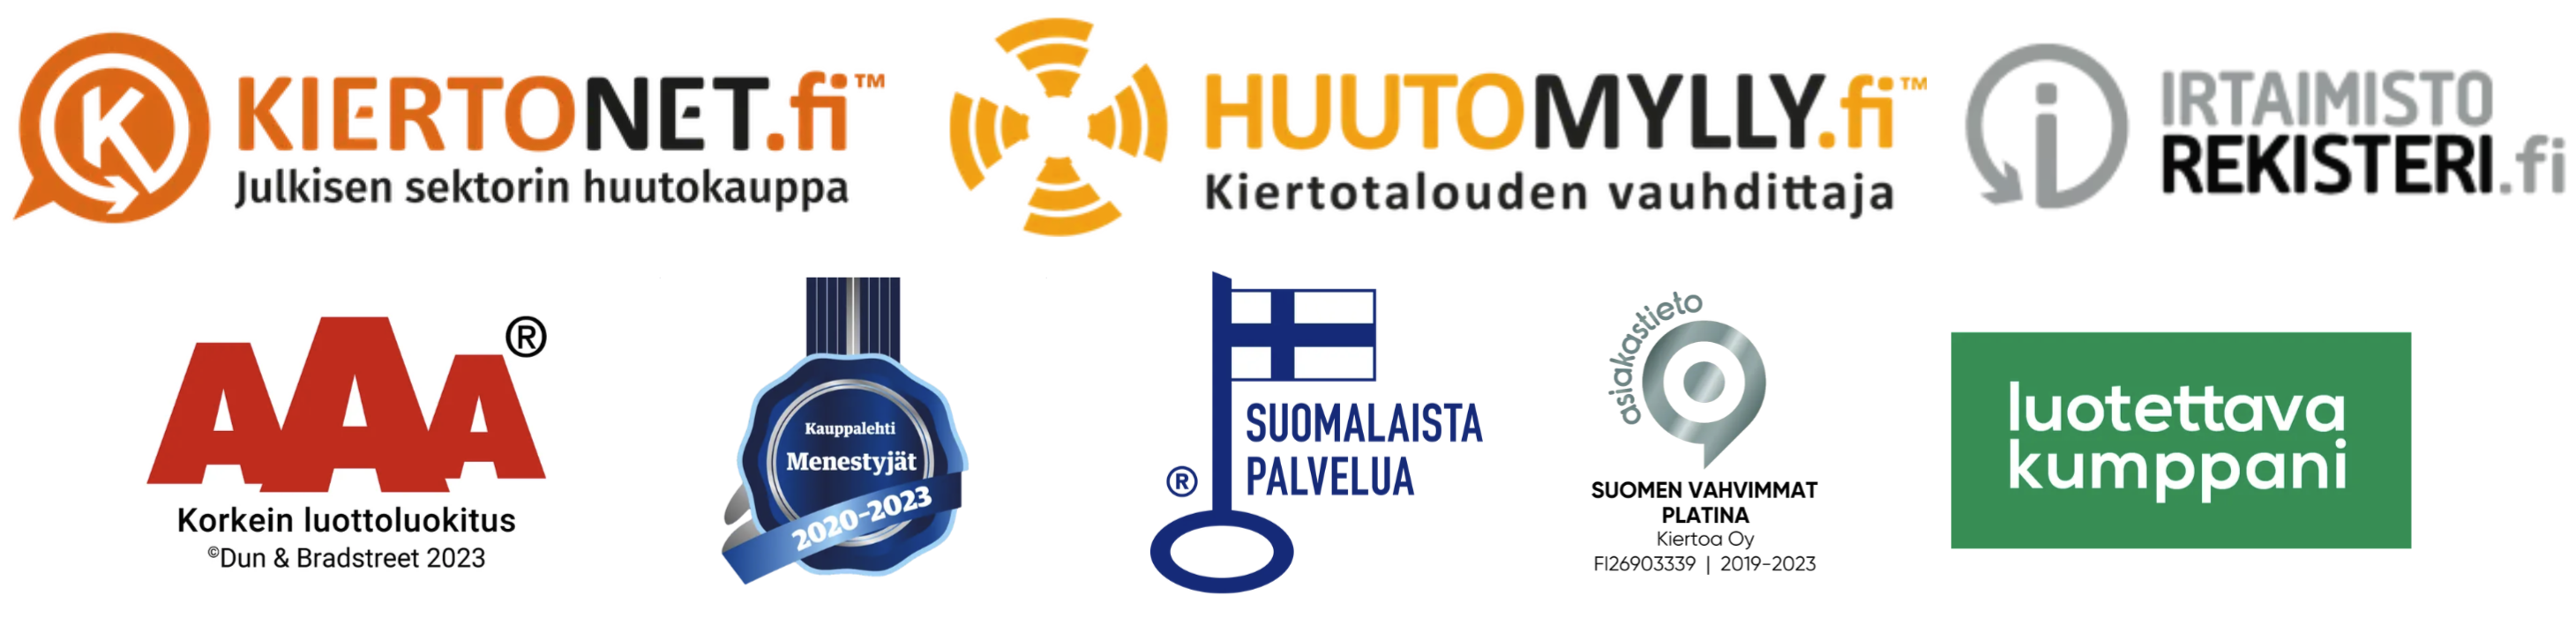 Images Kiertonet.fi ja Huutomylly.fi